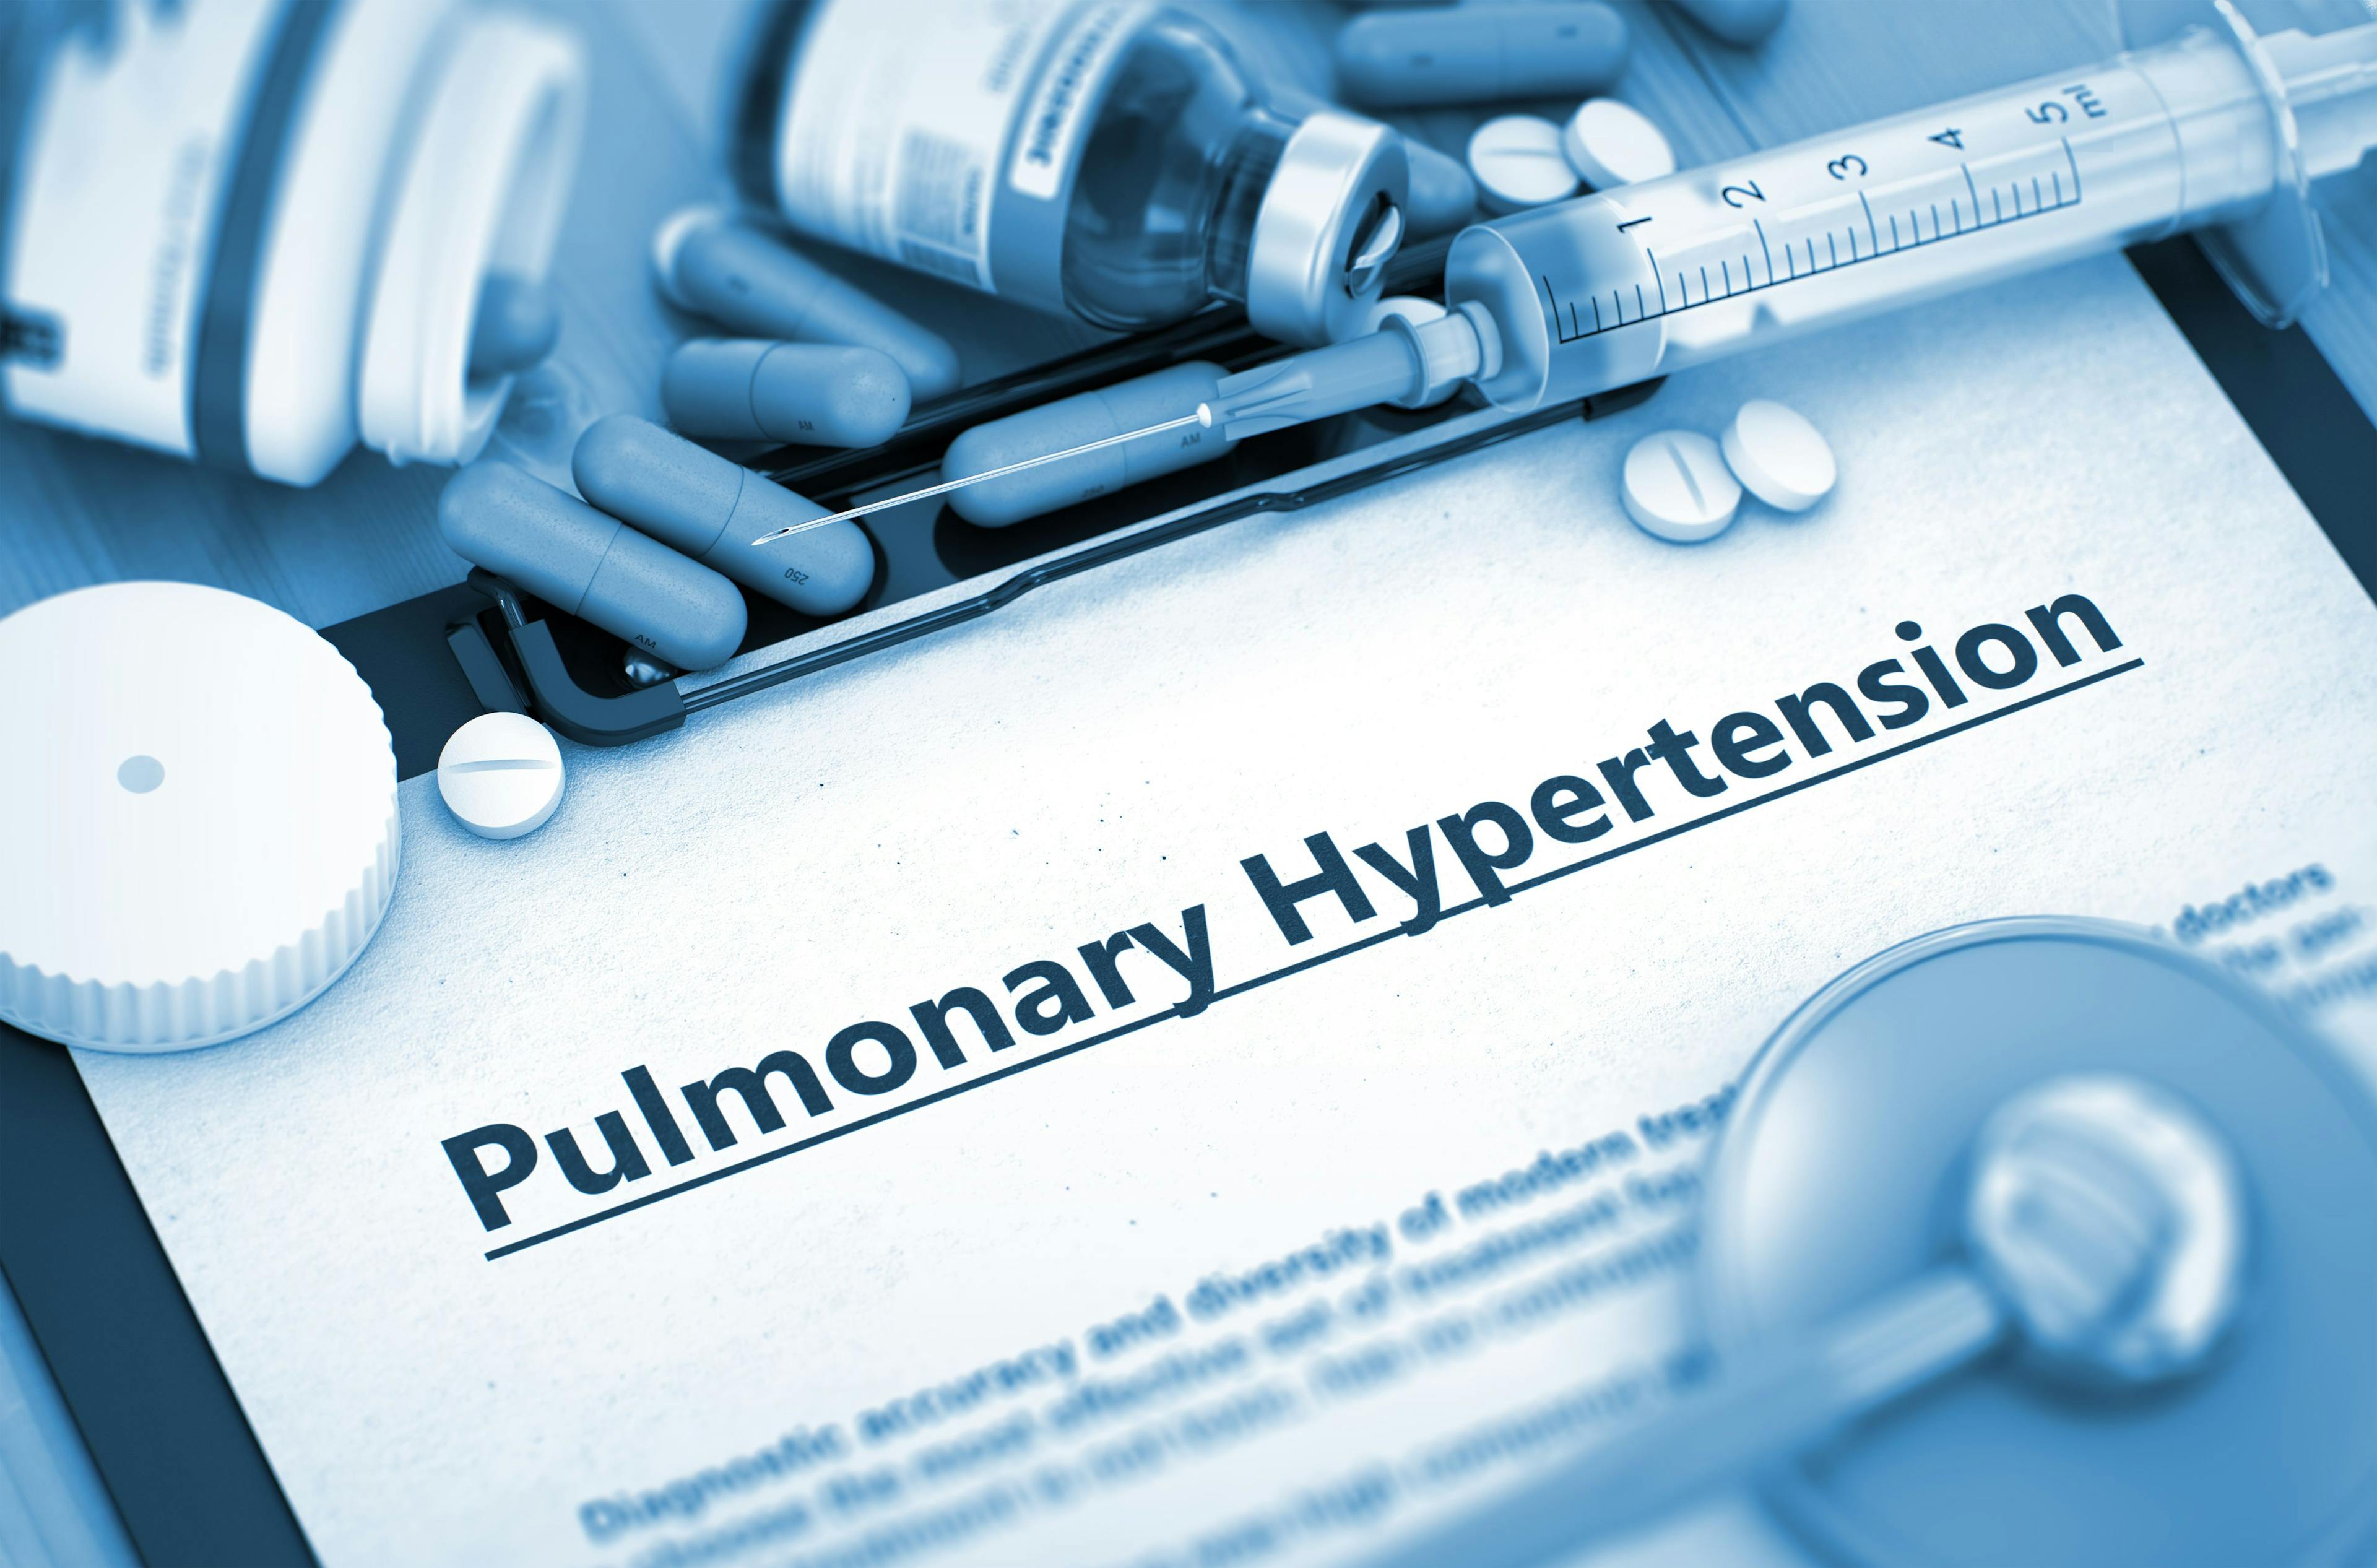 Diagnosis of Pulmonary Hypertension Model | image credit: tashatuvango - stock.adobe.com